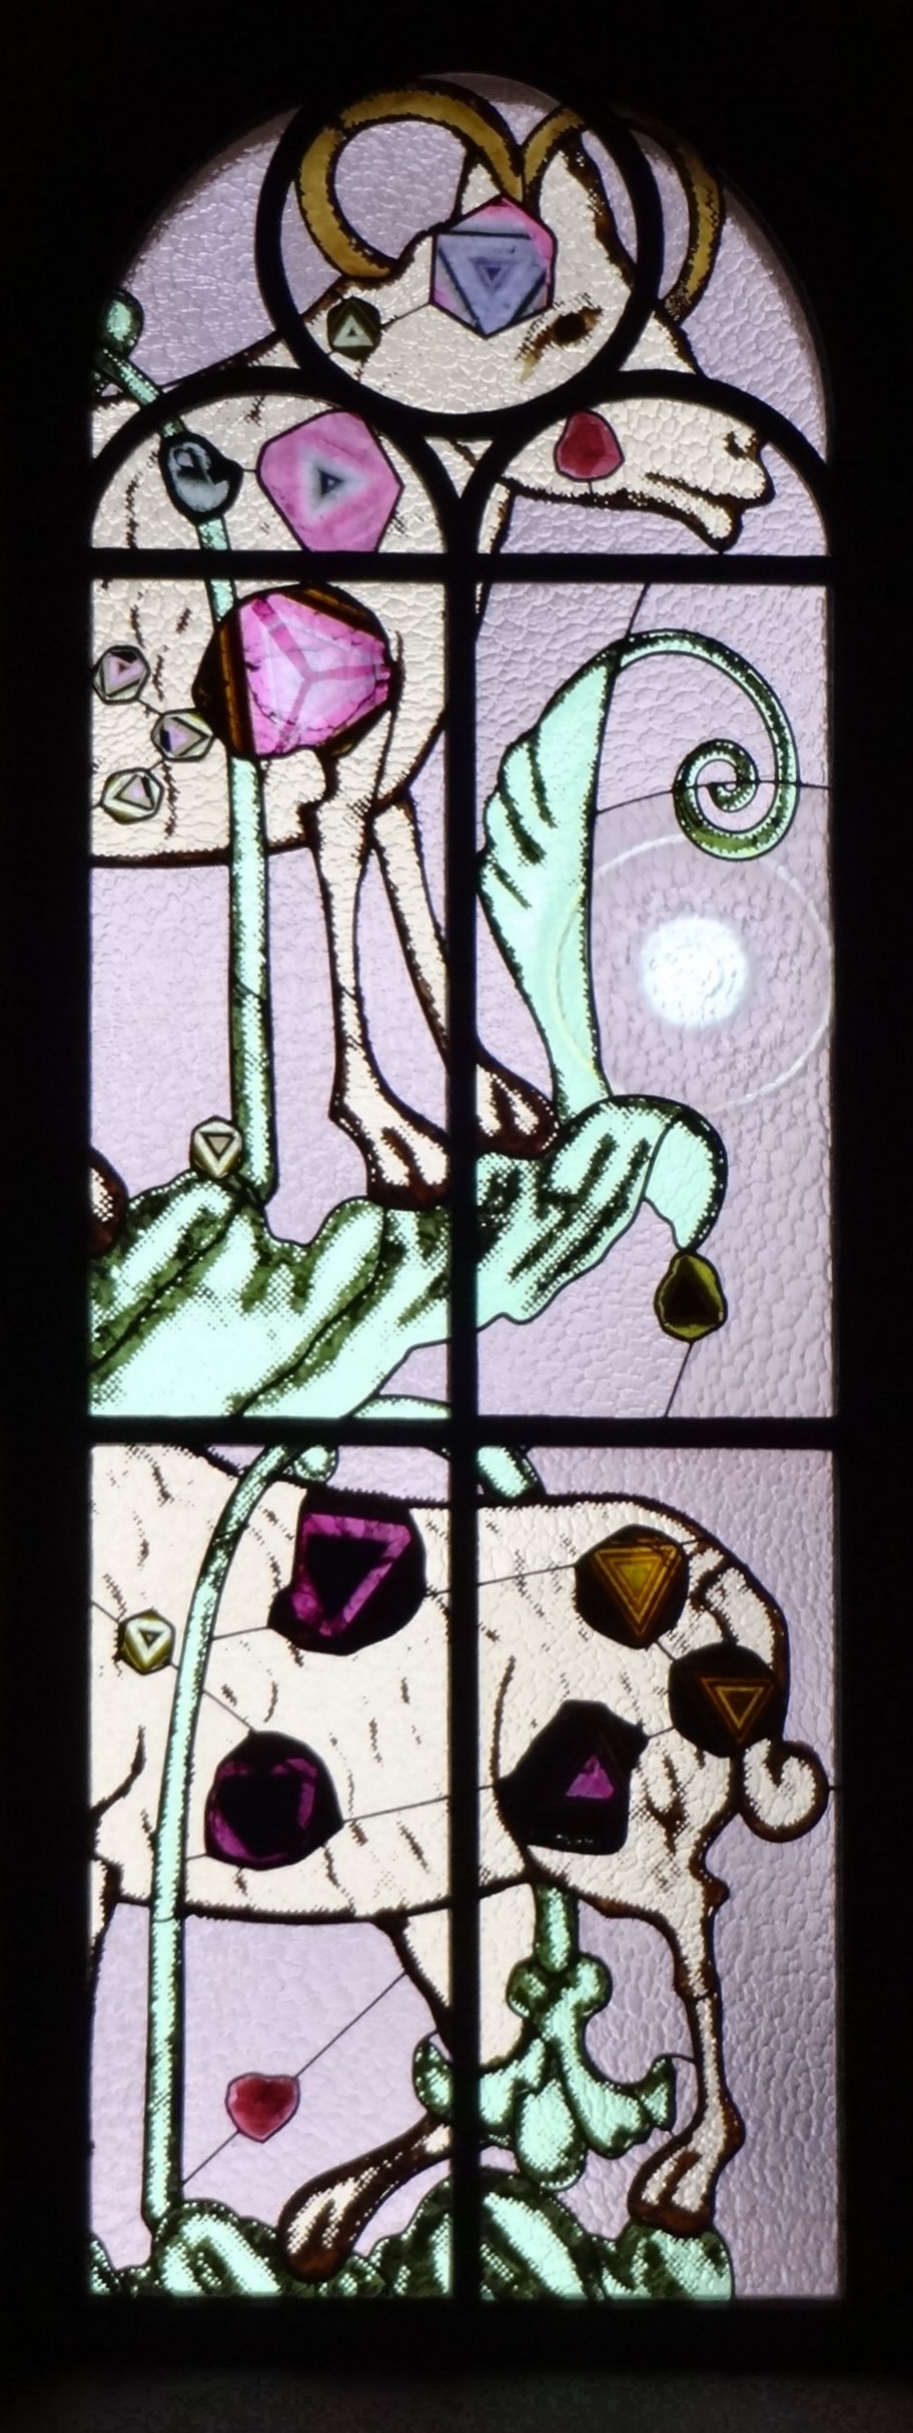 Zurich grossmu  nster stained glass window by sigmar polke scapegoat